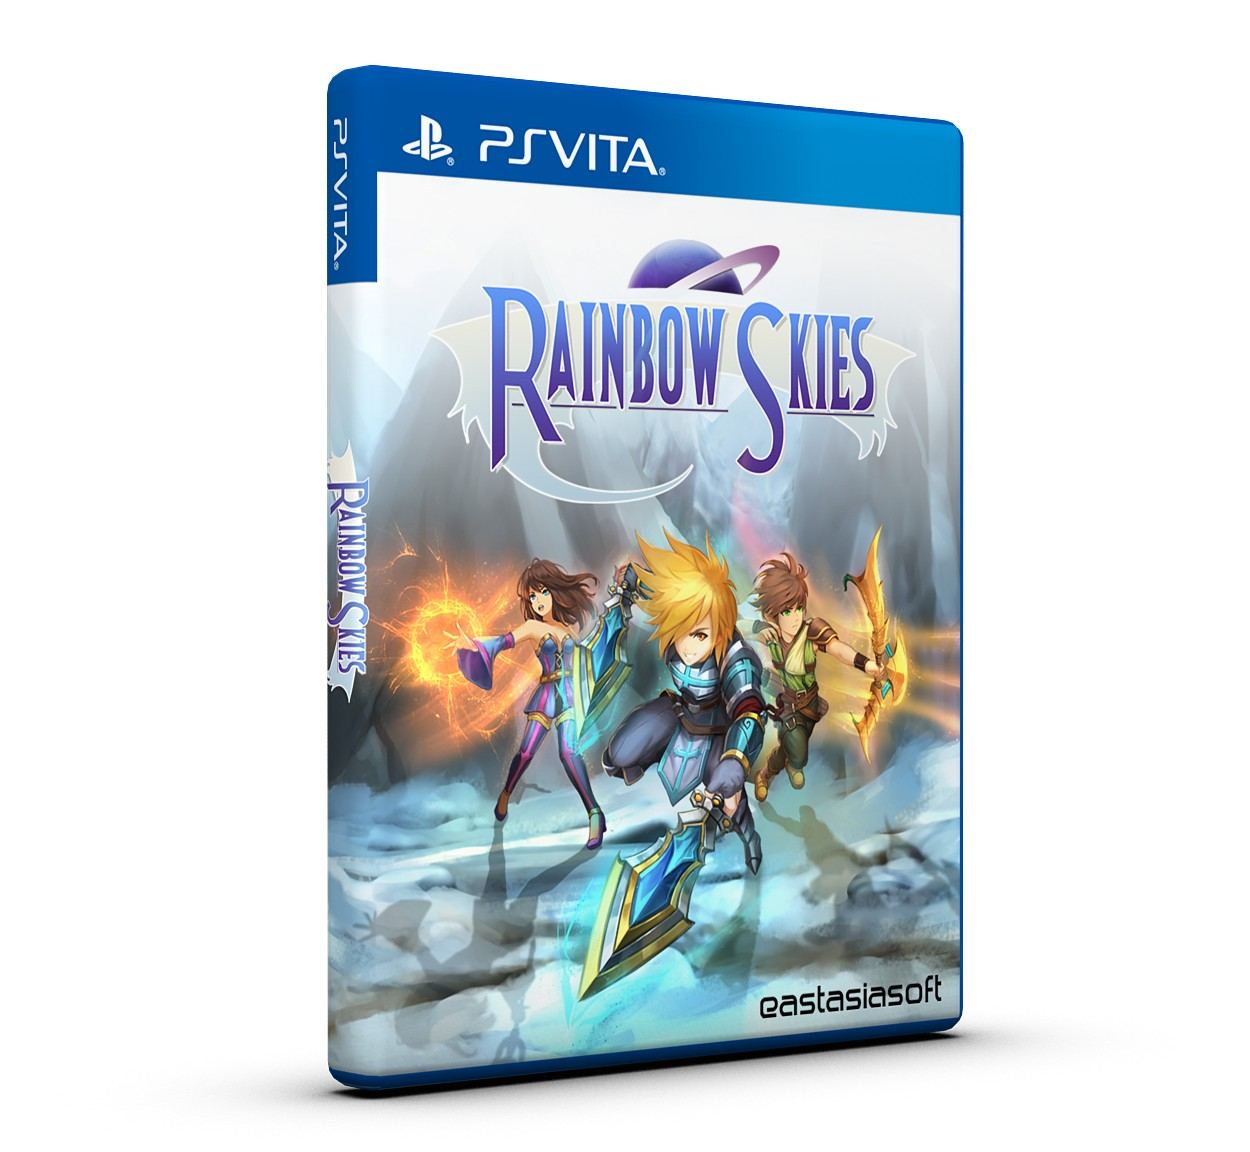 Rainbow Skies  Play-Asia.com exclusive (Asia)